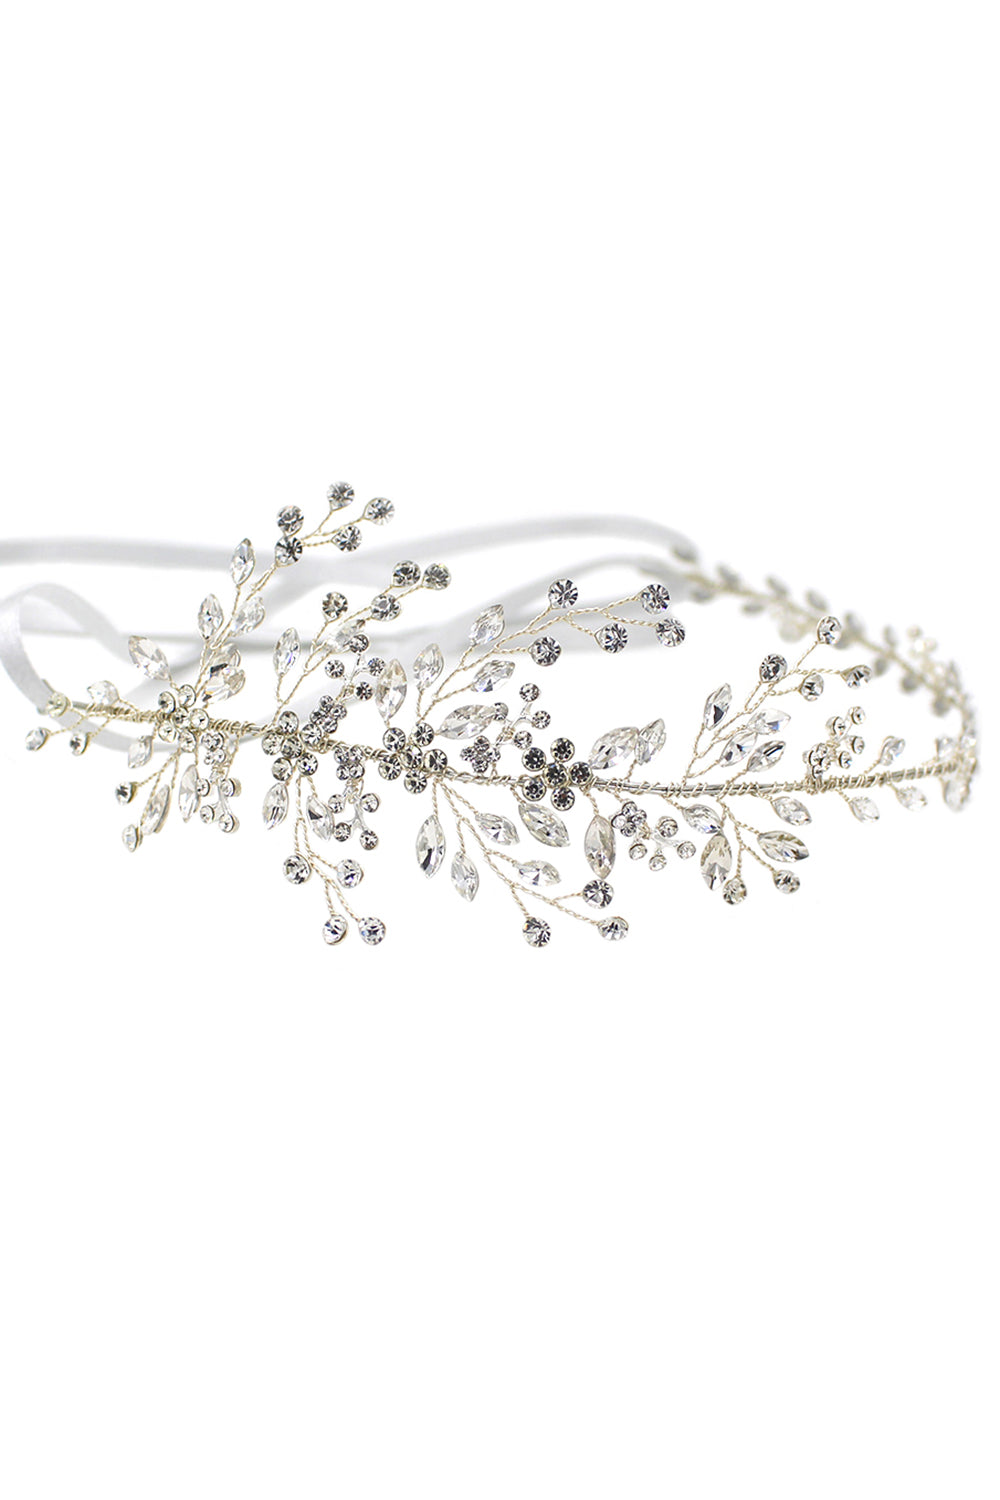 Shiny Rhinestone Branch Bridal Headband